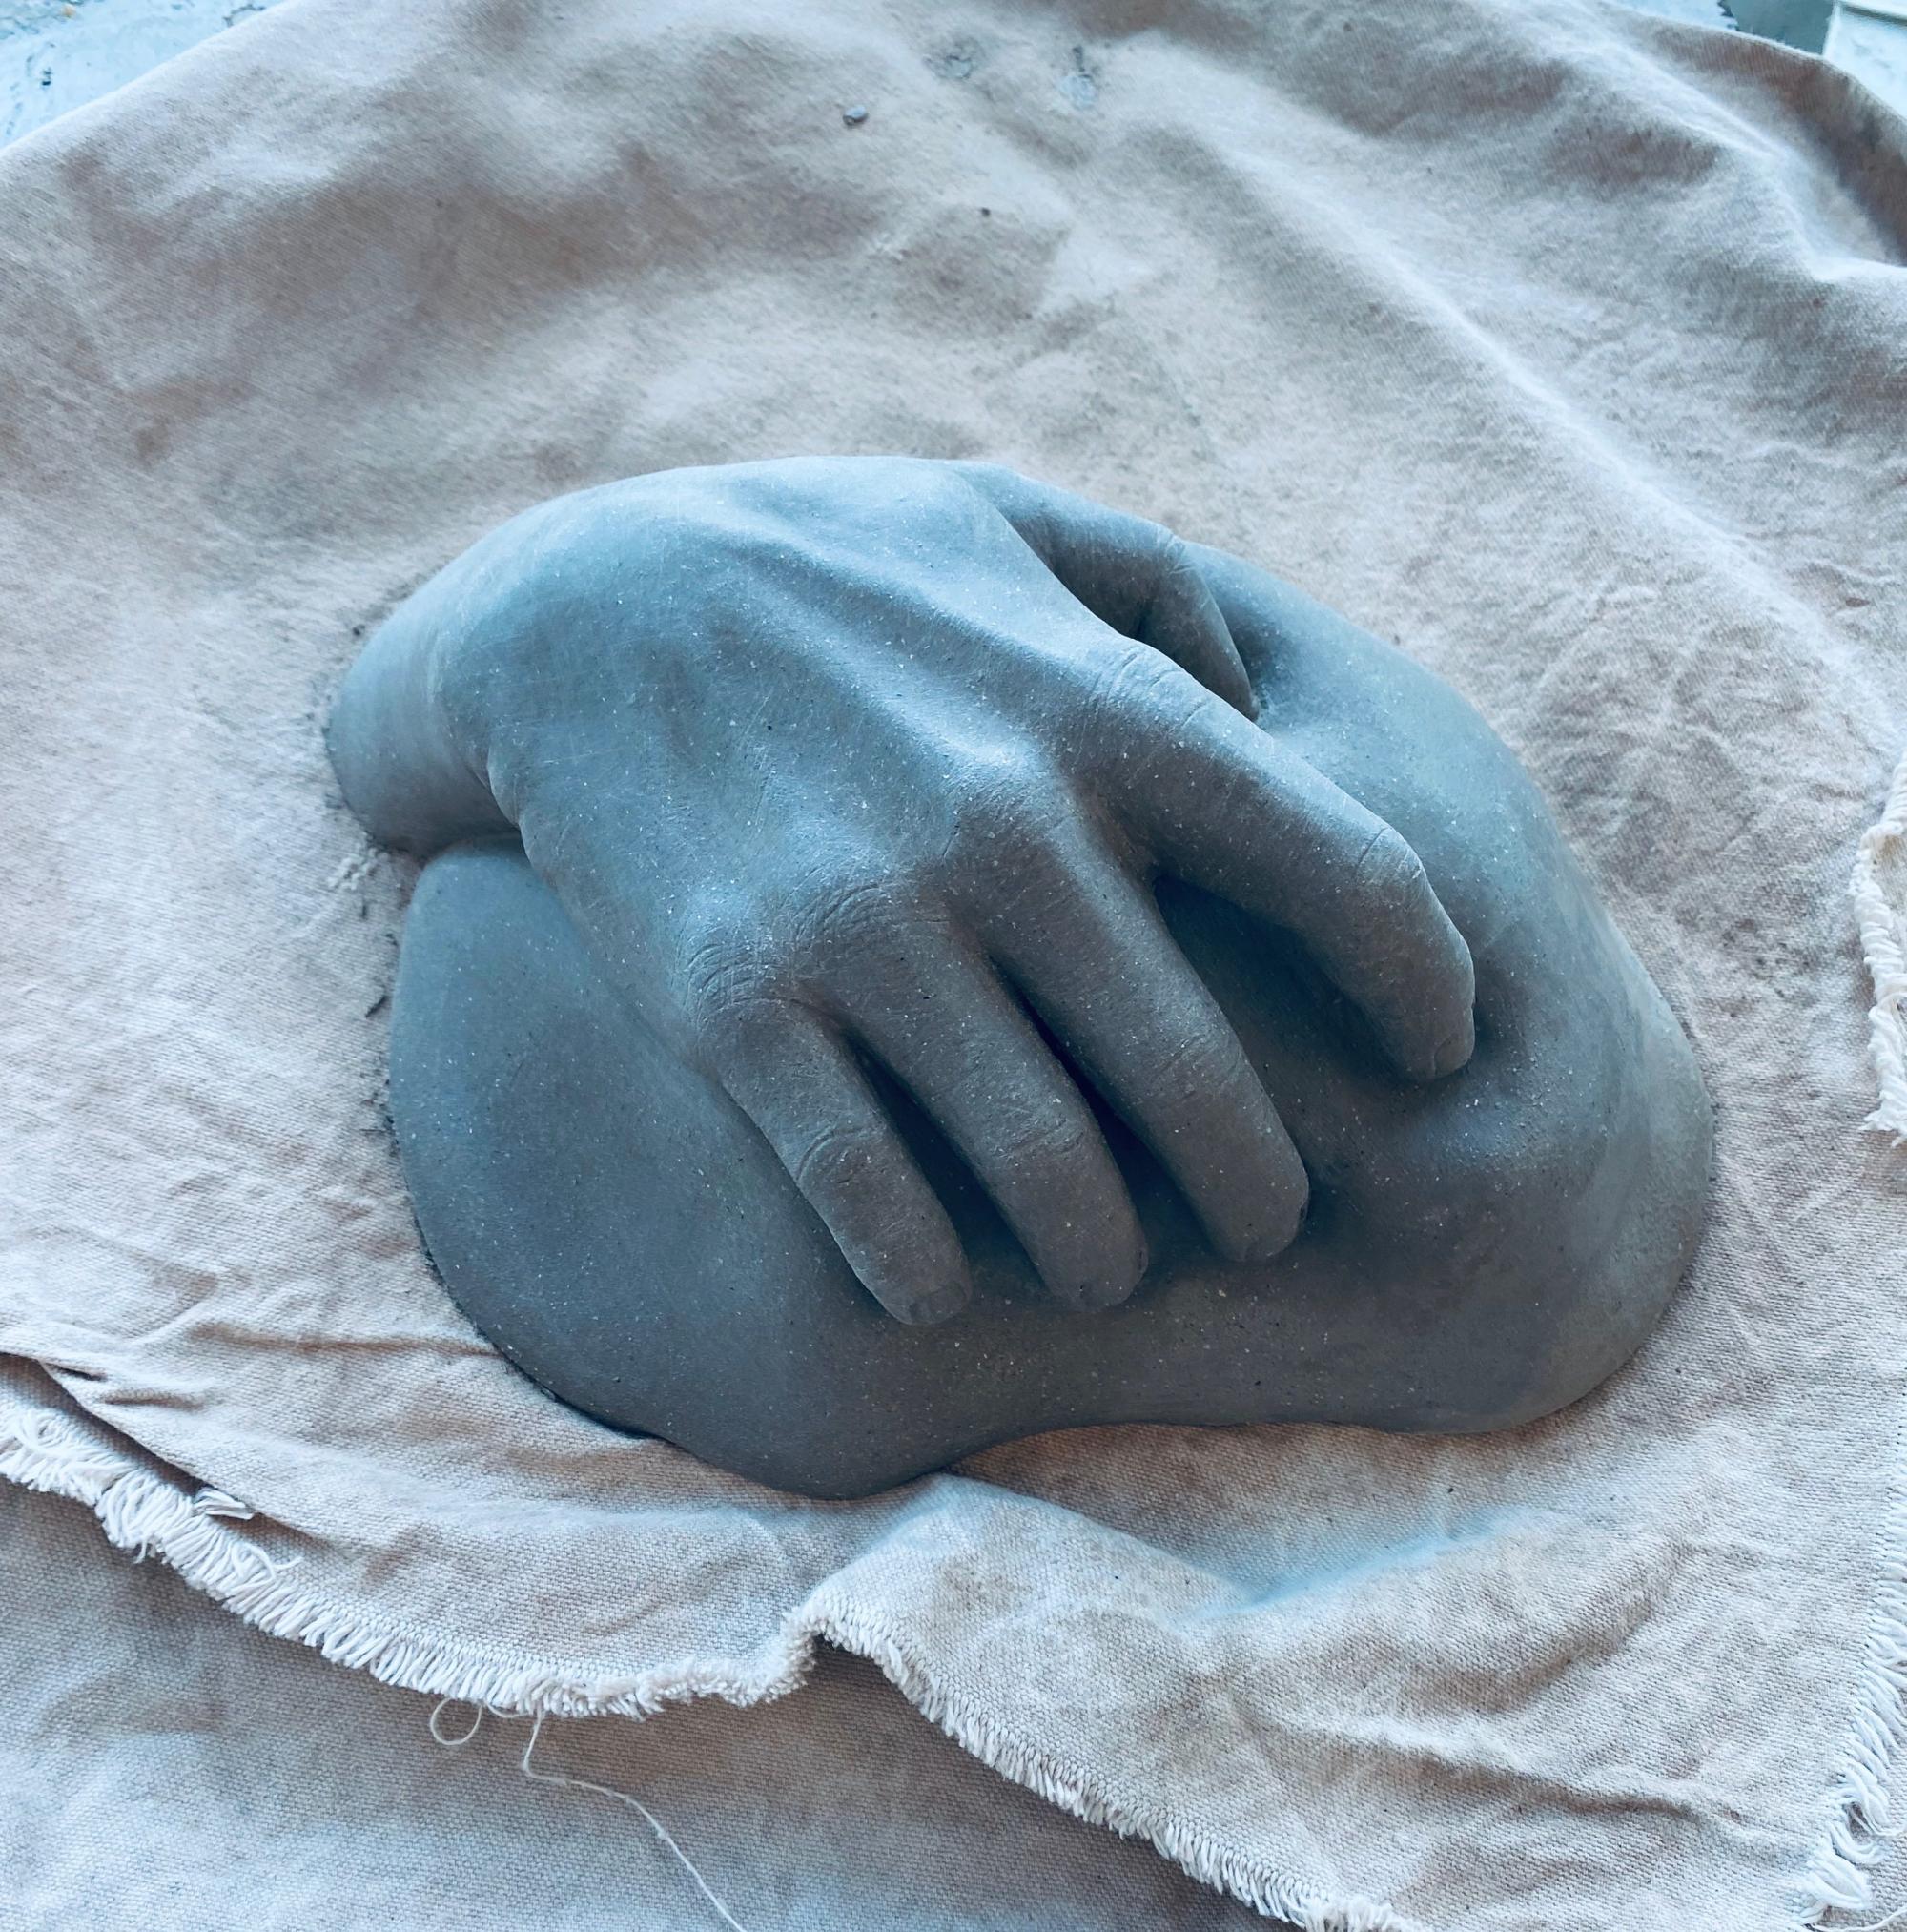 Medium dark gray clay hand grasping onto medium dark gray fleshy-looking figure.